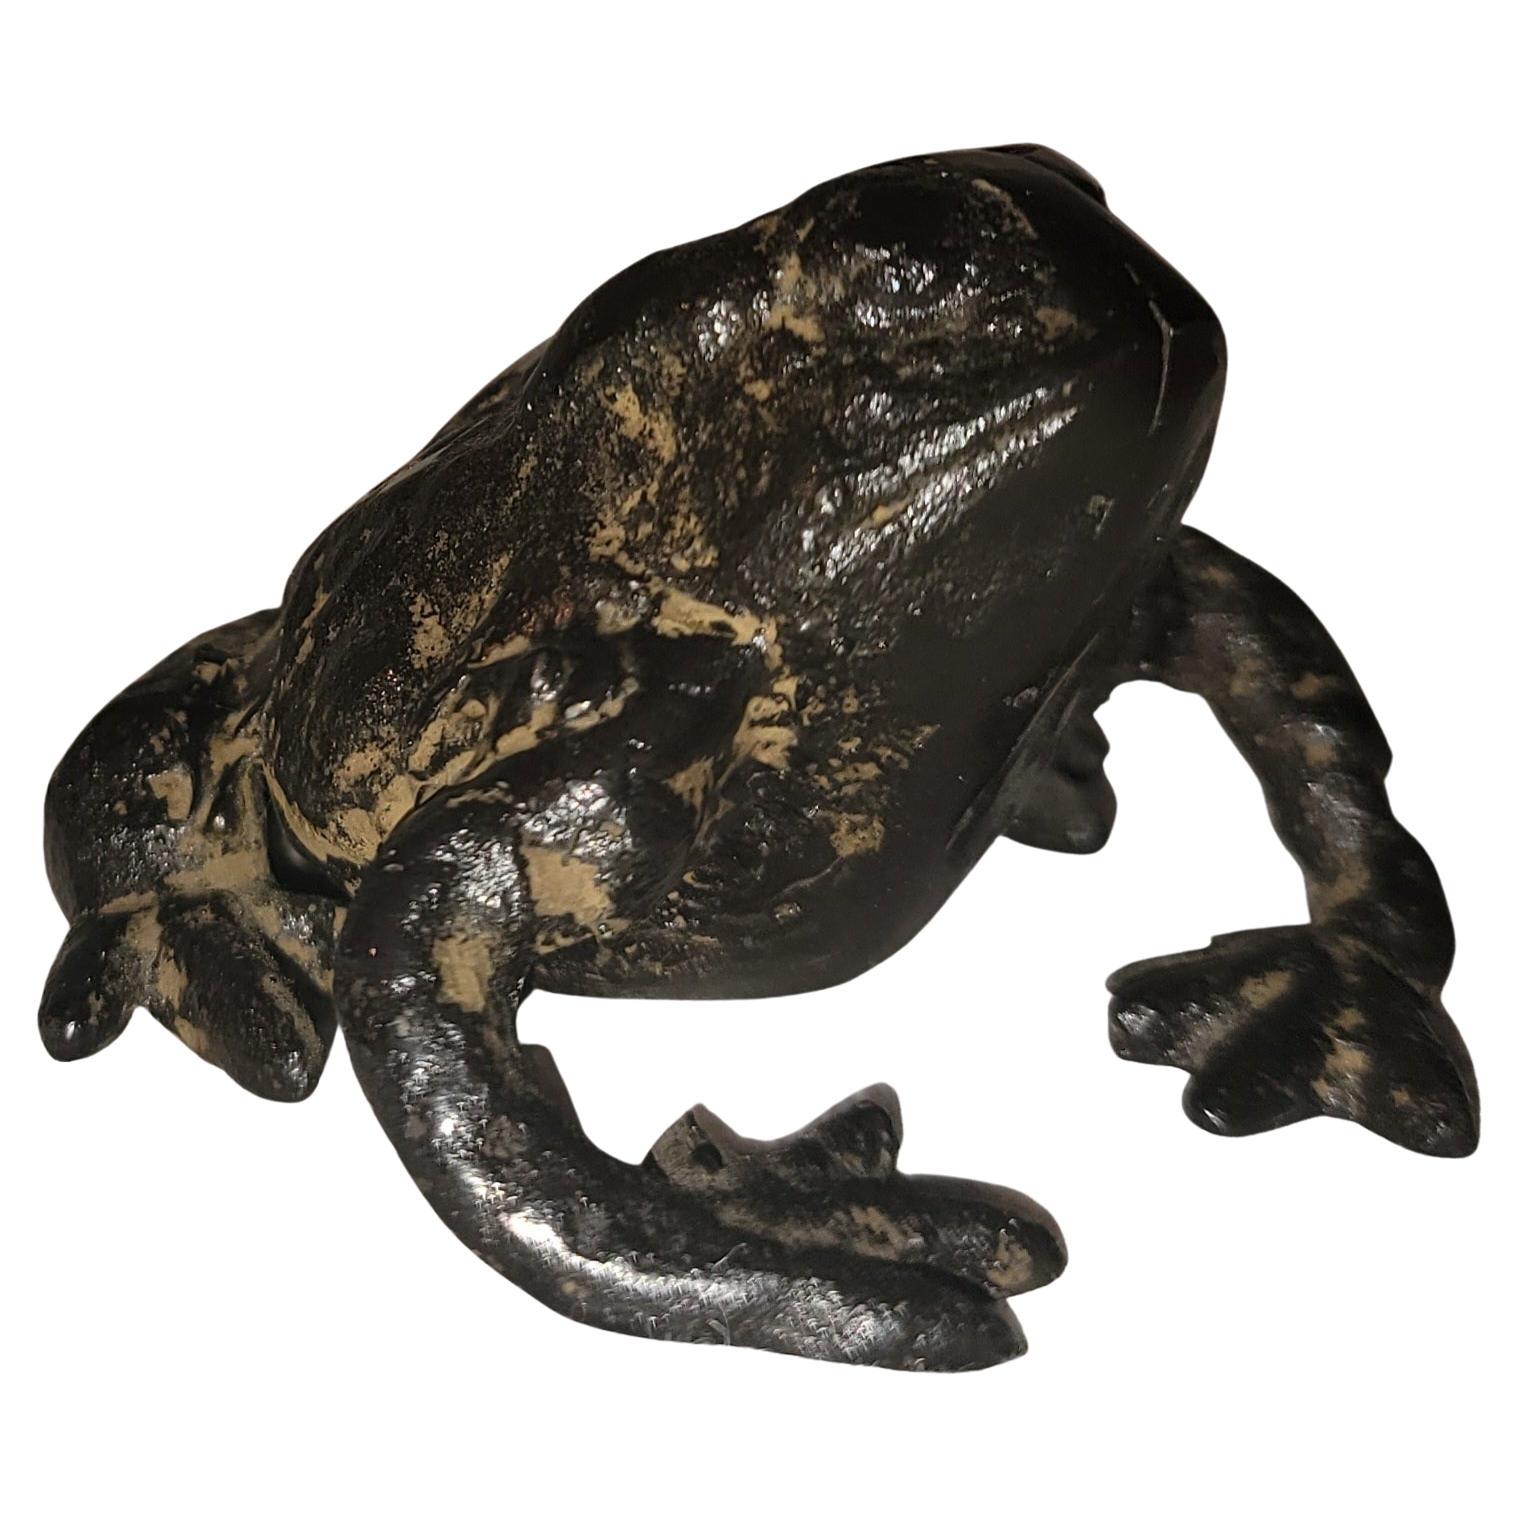 Frog Garden Ornament or Desk Weight